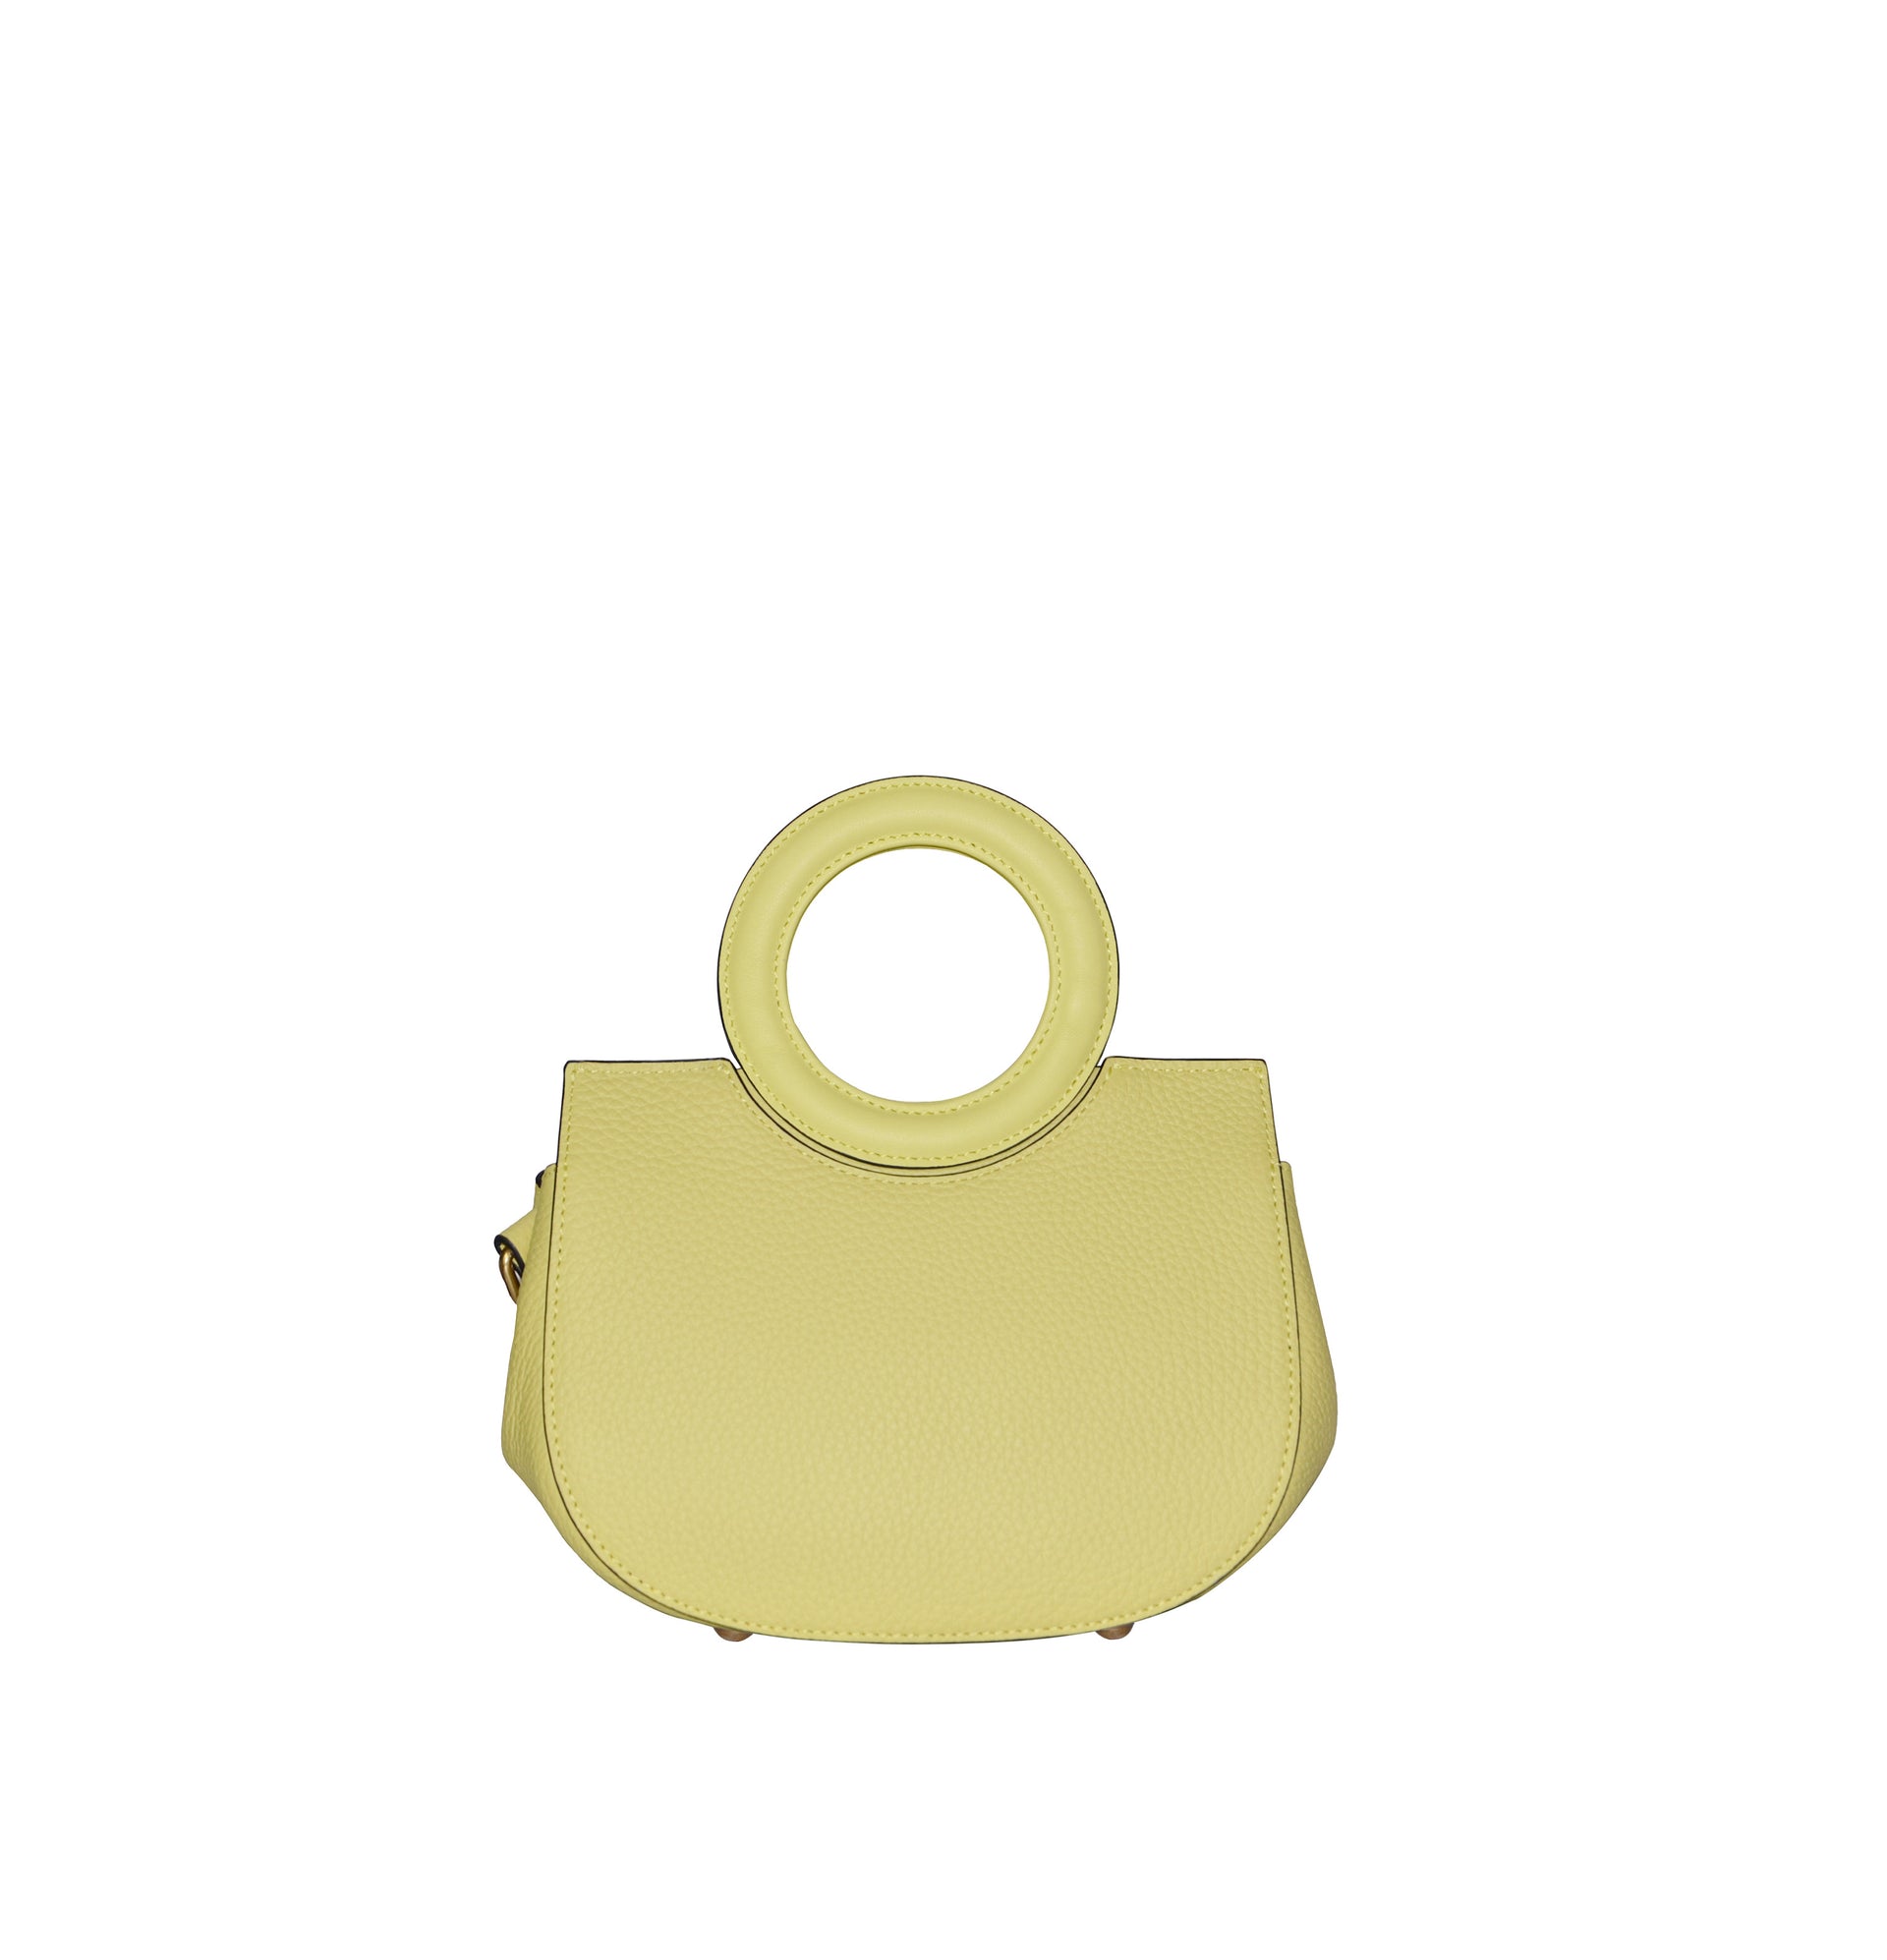 Pin on Bags Designer Totes